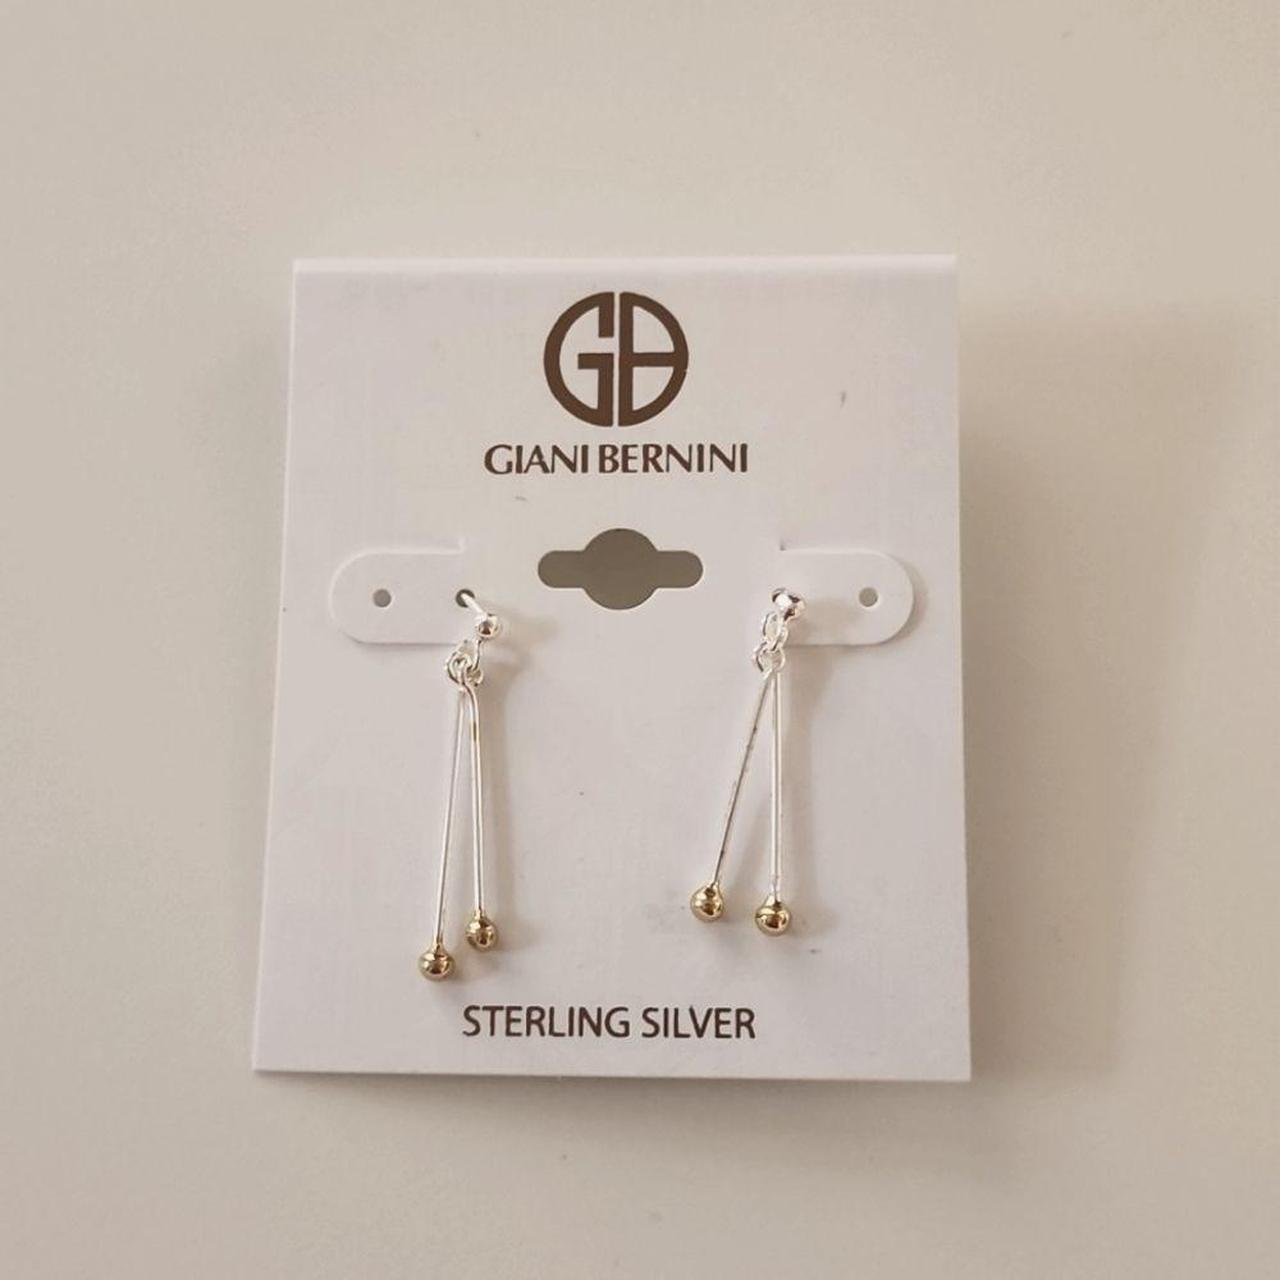 NWT Giani Bernini Pair of Earrings, Sterling Silver - Depop